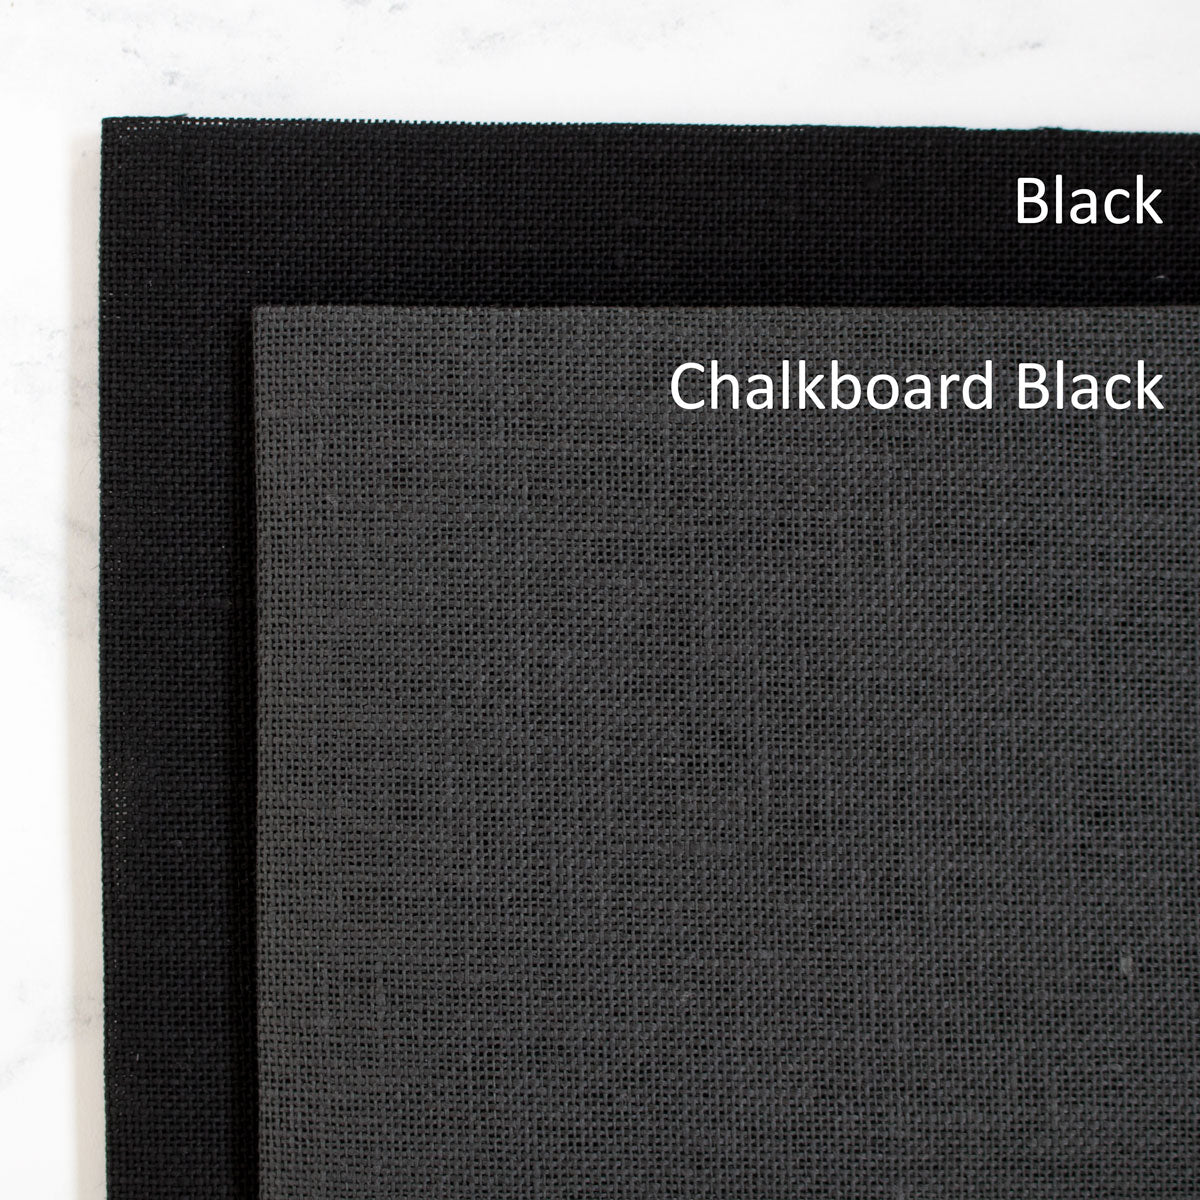 Birch Blackboard Chalkboard Chalk Cloth Material Fabric Size 47x36